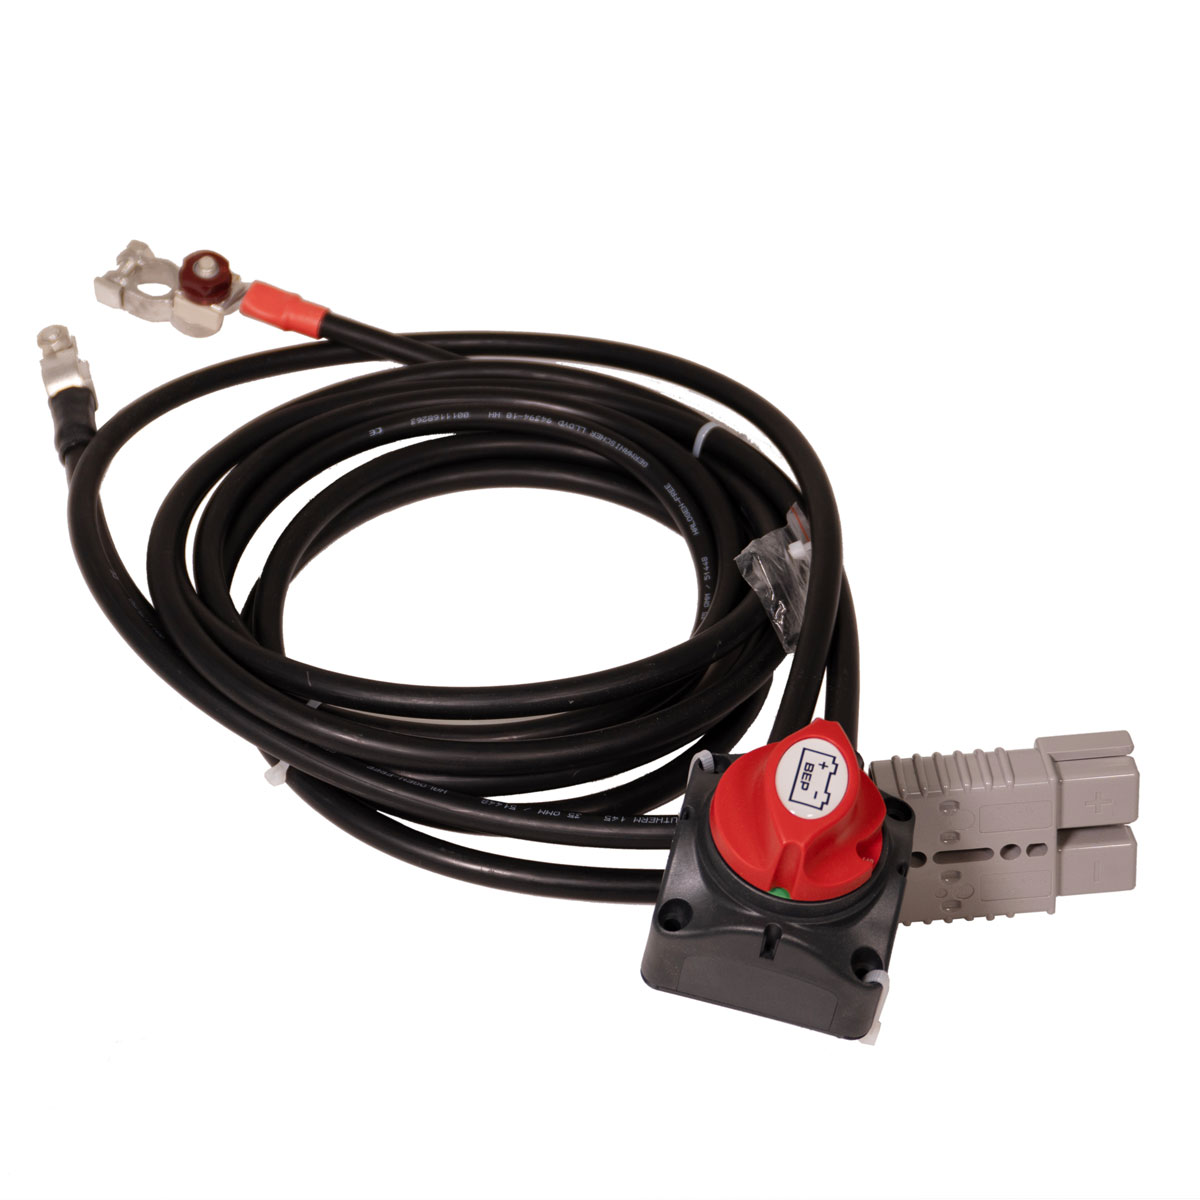 Torqeedo Cable Set C3.0/C6.0 BUS